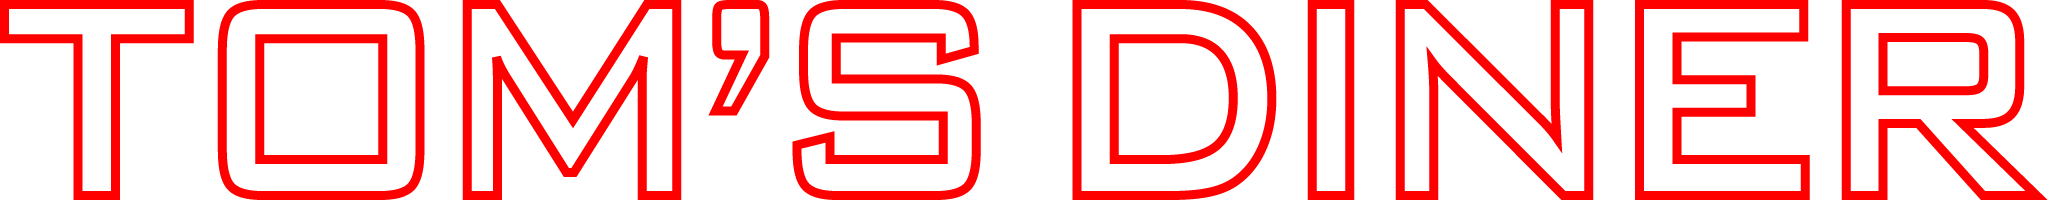 Tom’s Diner logo